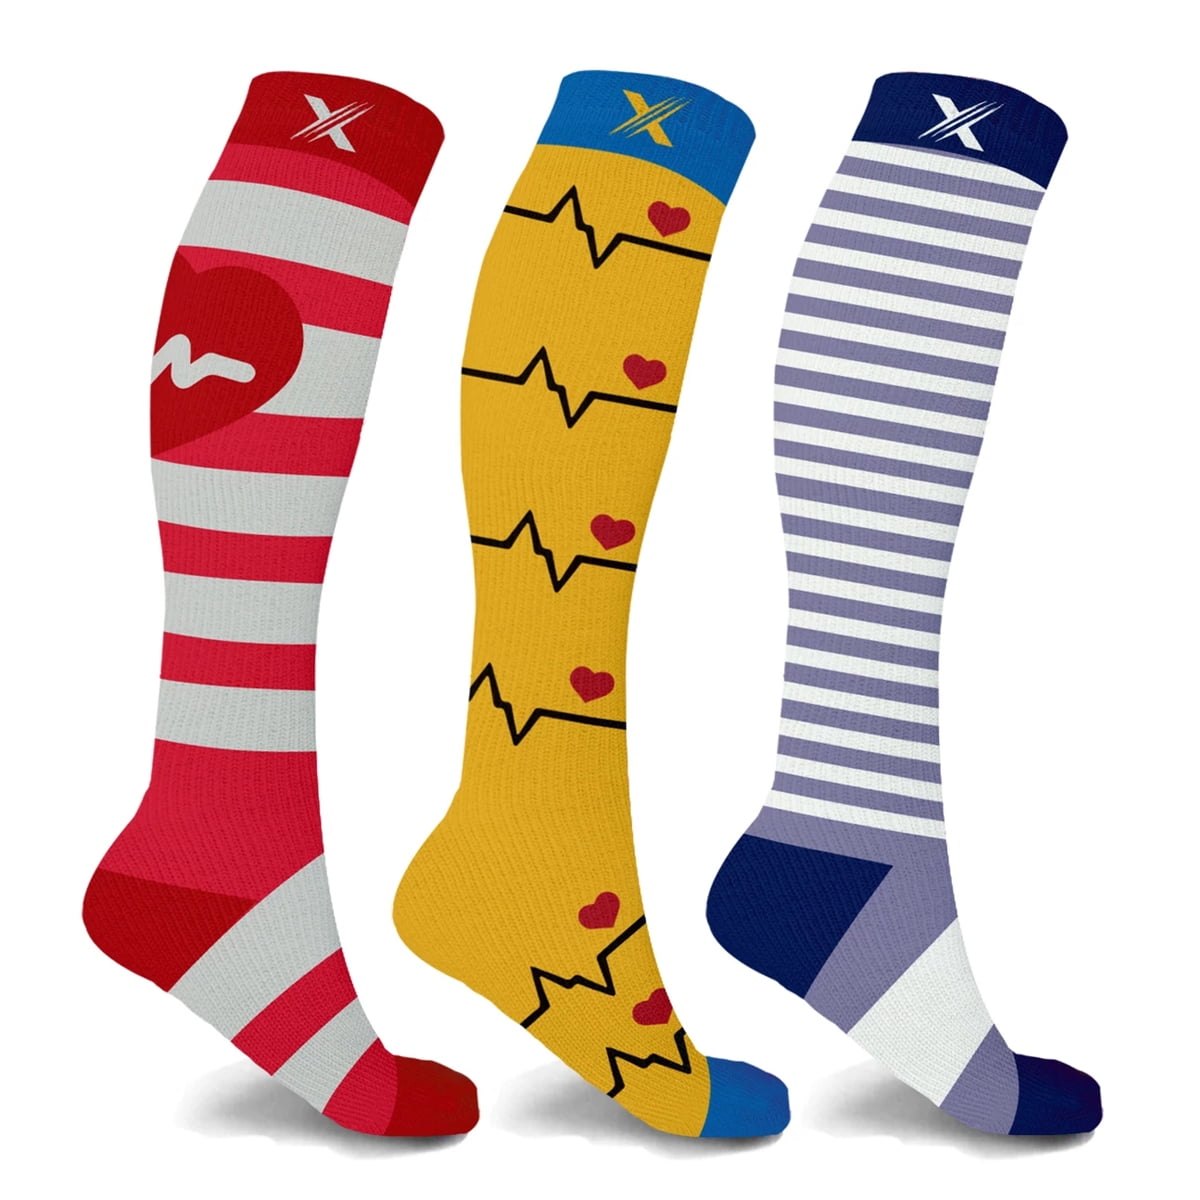 Hiking Nurses Tie-dye Compression Socks for Women & Men Circulation 20-30 mmHg- Best Support for Softball Running Medical